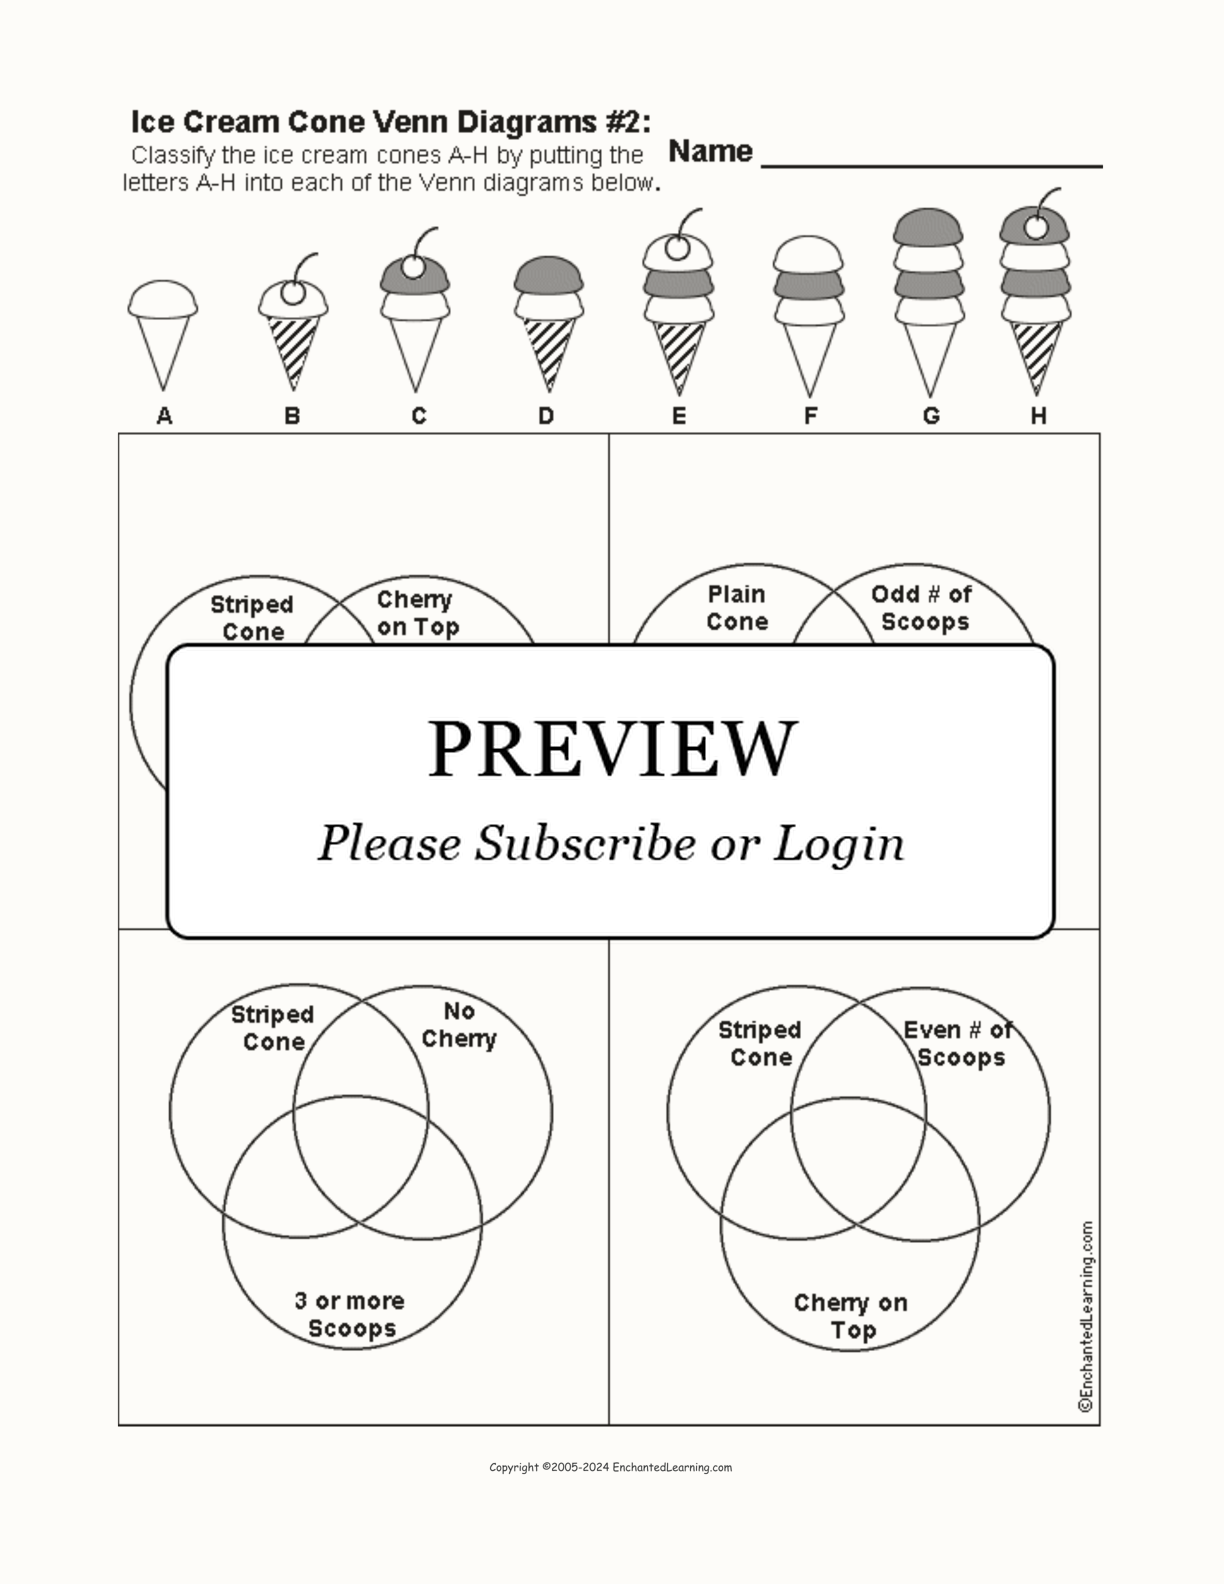 Ice Cream Cone Venn Diagram #2 interactive worksheet page 1